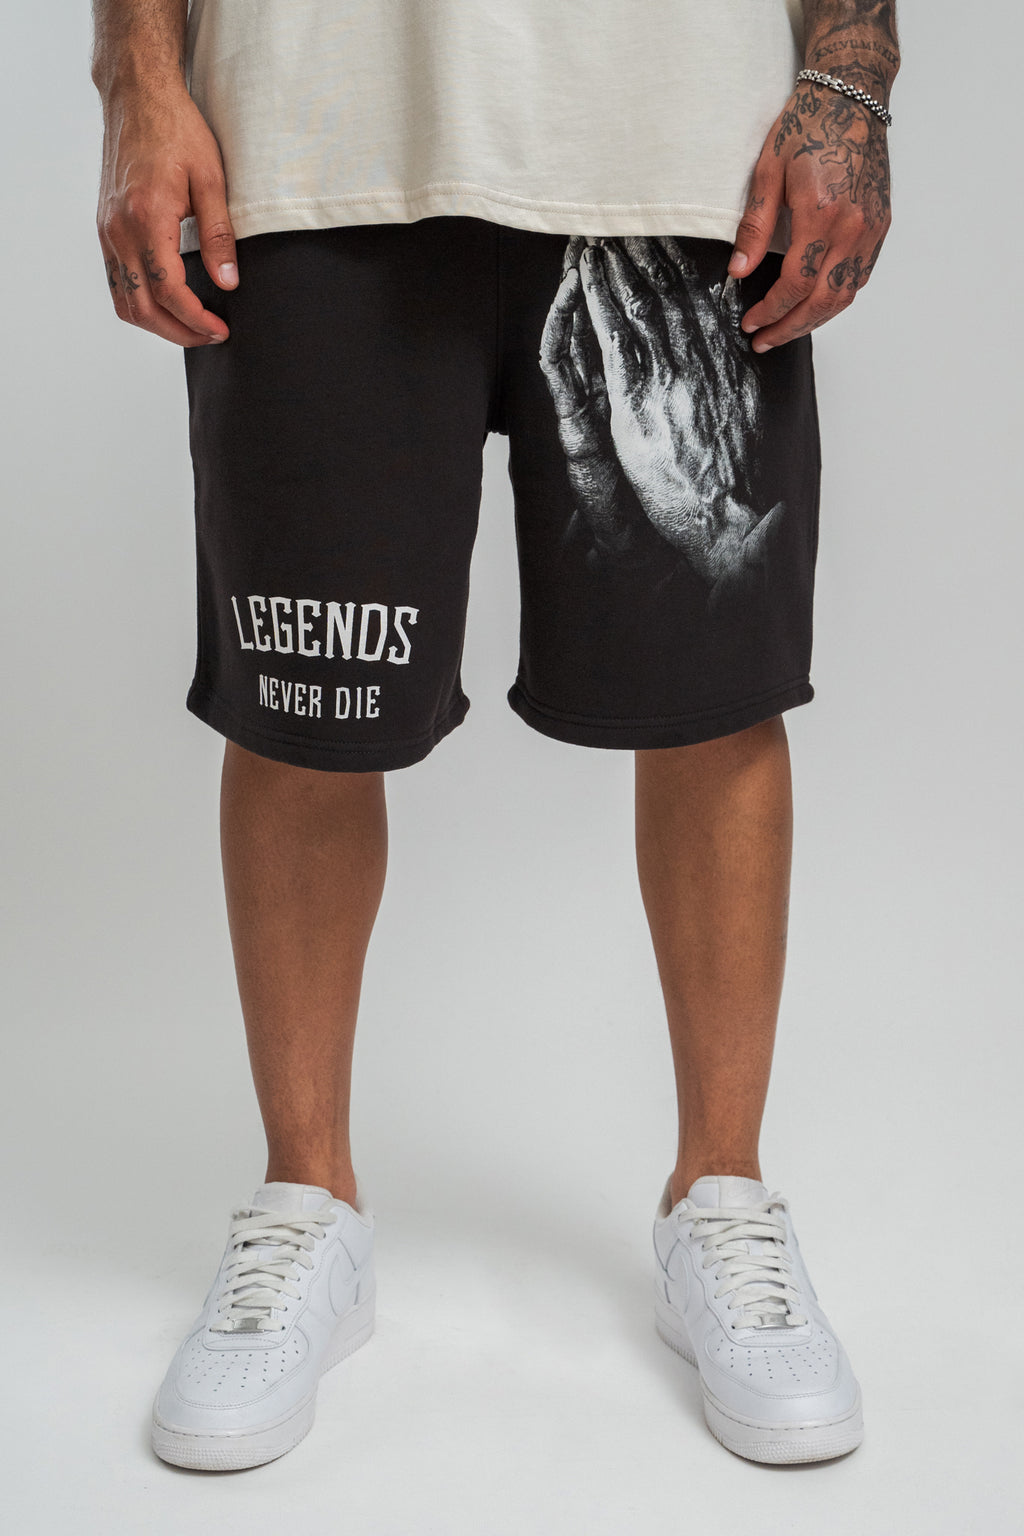 Dropsize Heavy Legends Sweat Shorts Washed Black